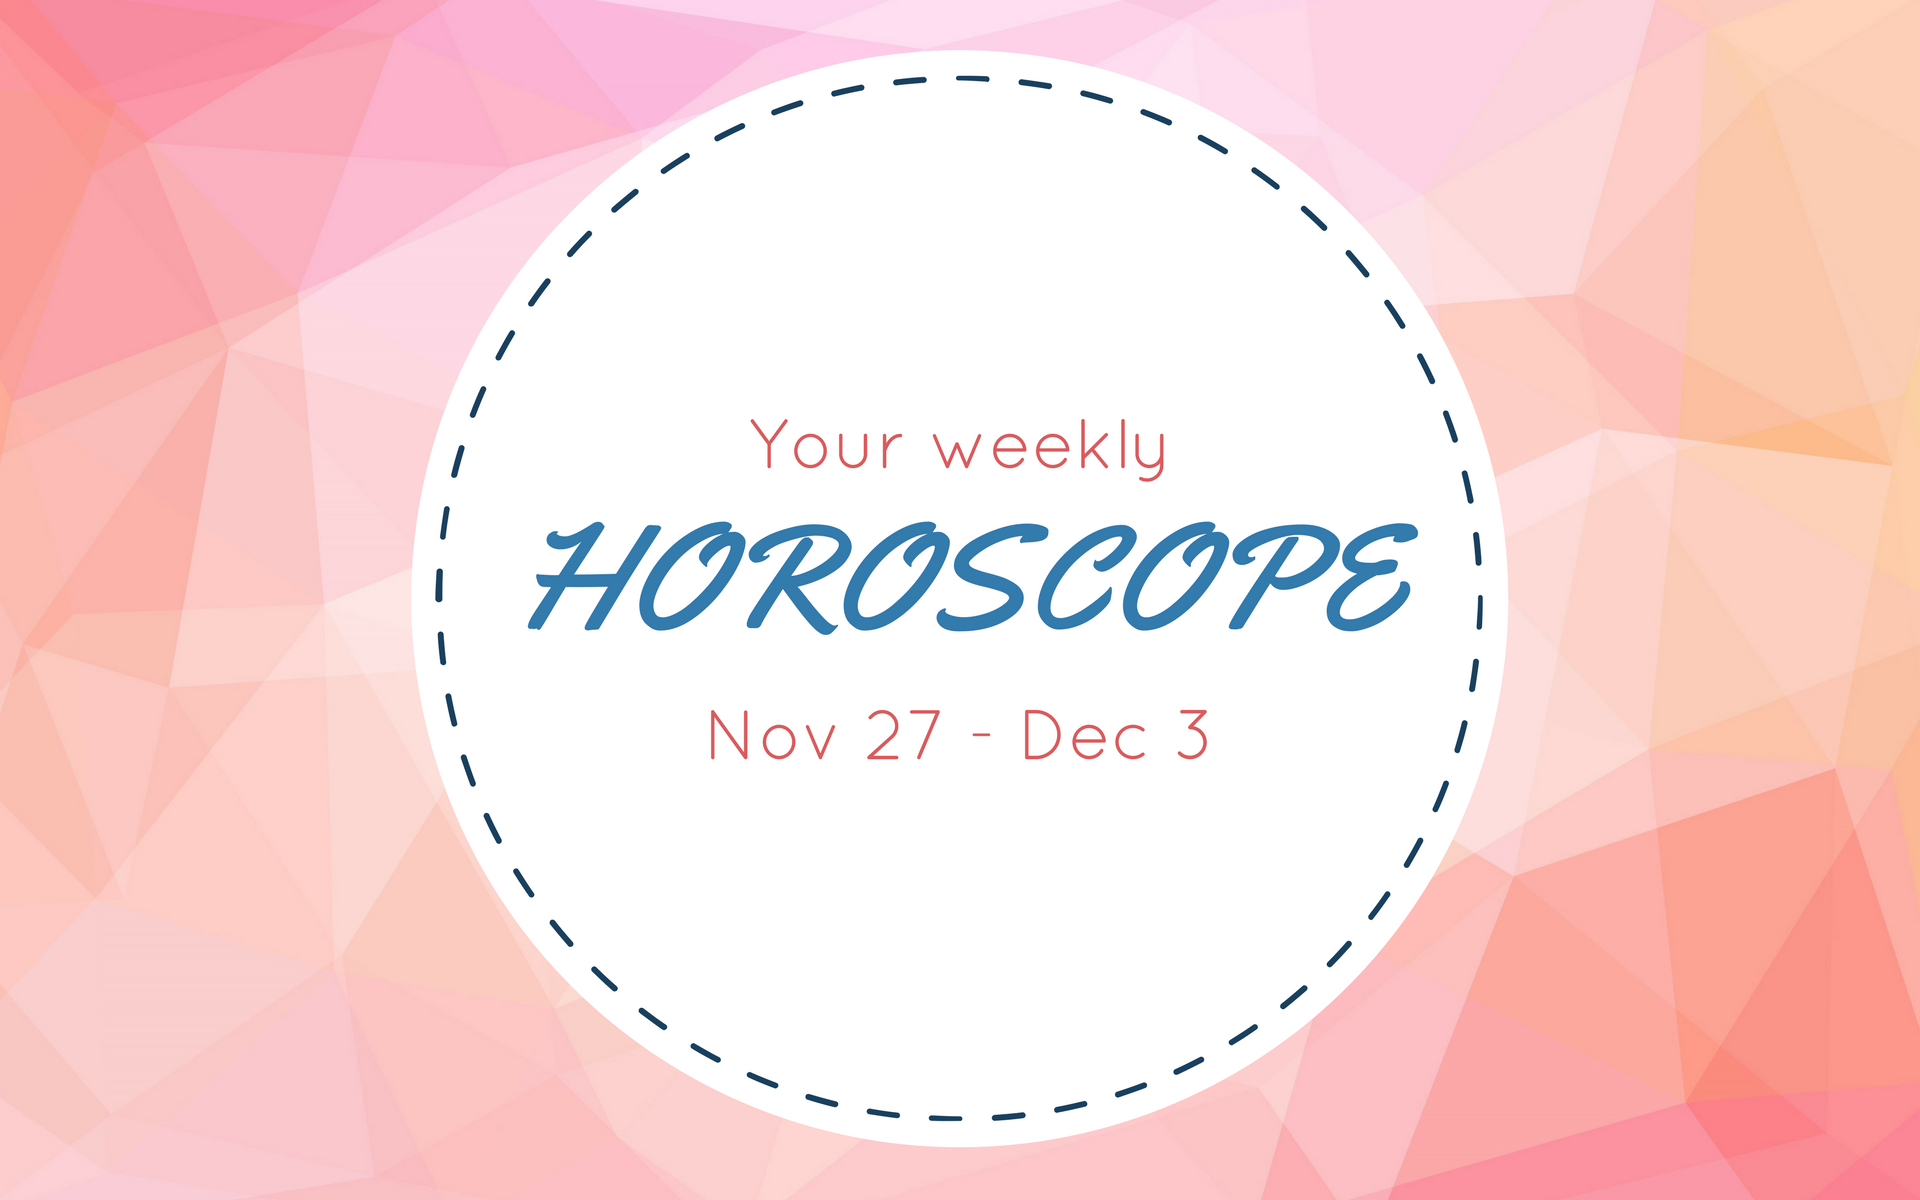 Your Weekly Horoscope: Nov 27 - Dec 3